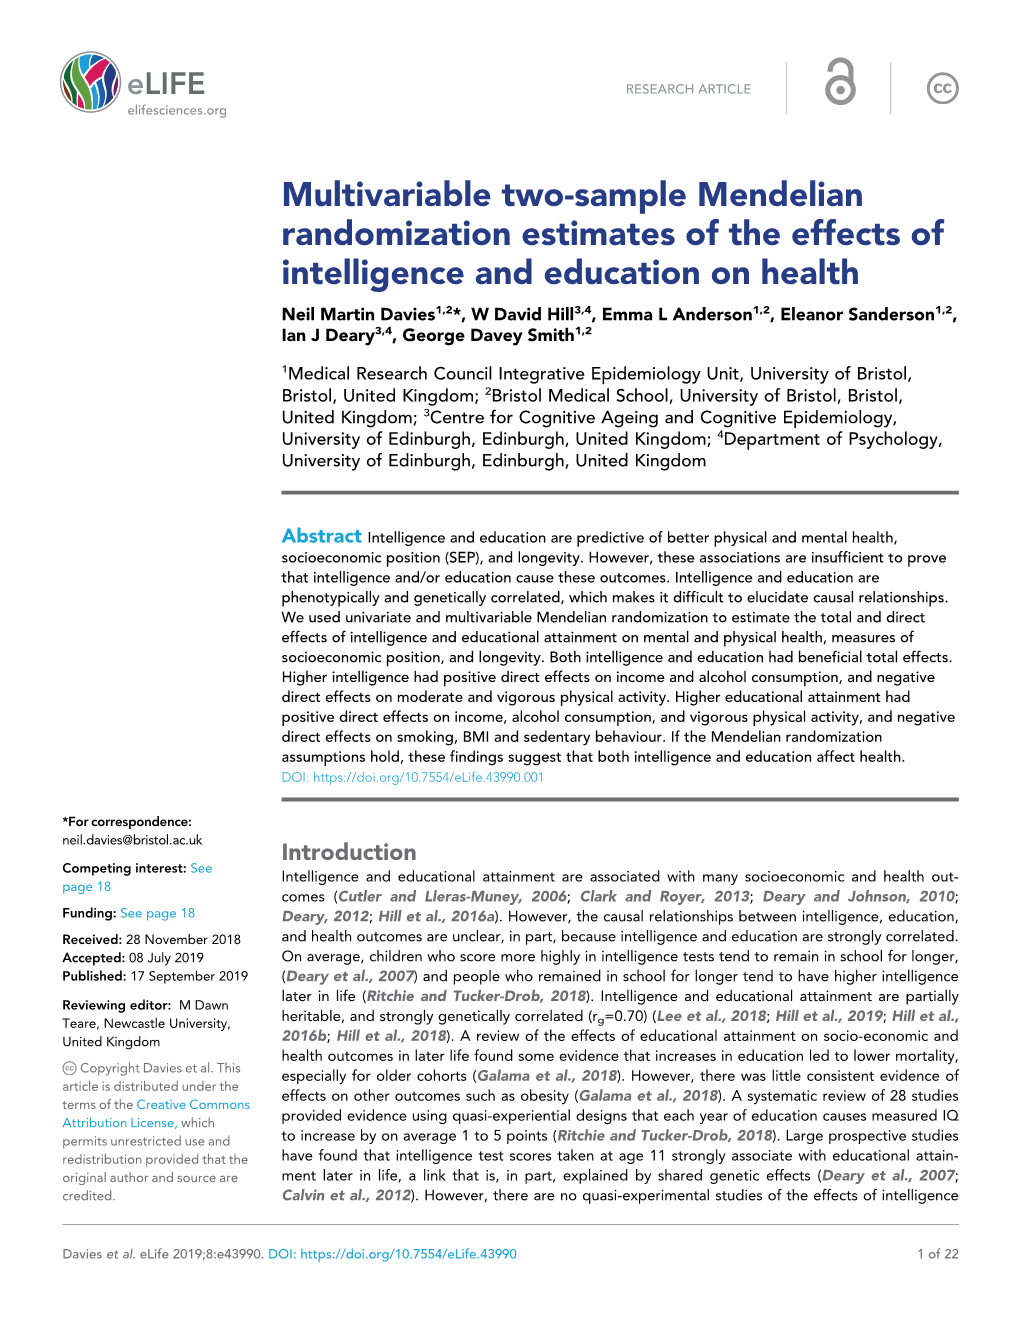 Multivariable Two-Sample Mendelian Randomization Estimates of The